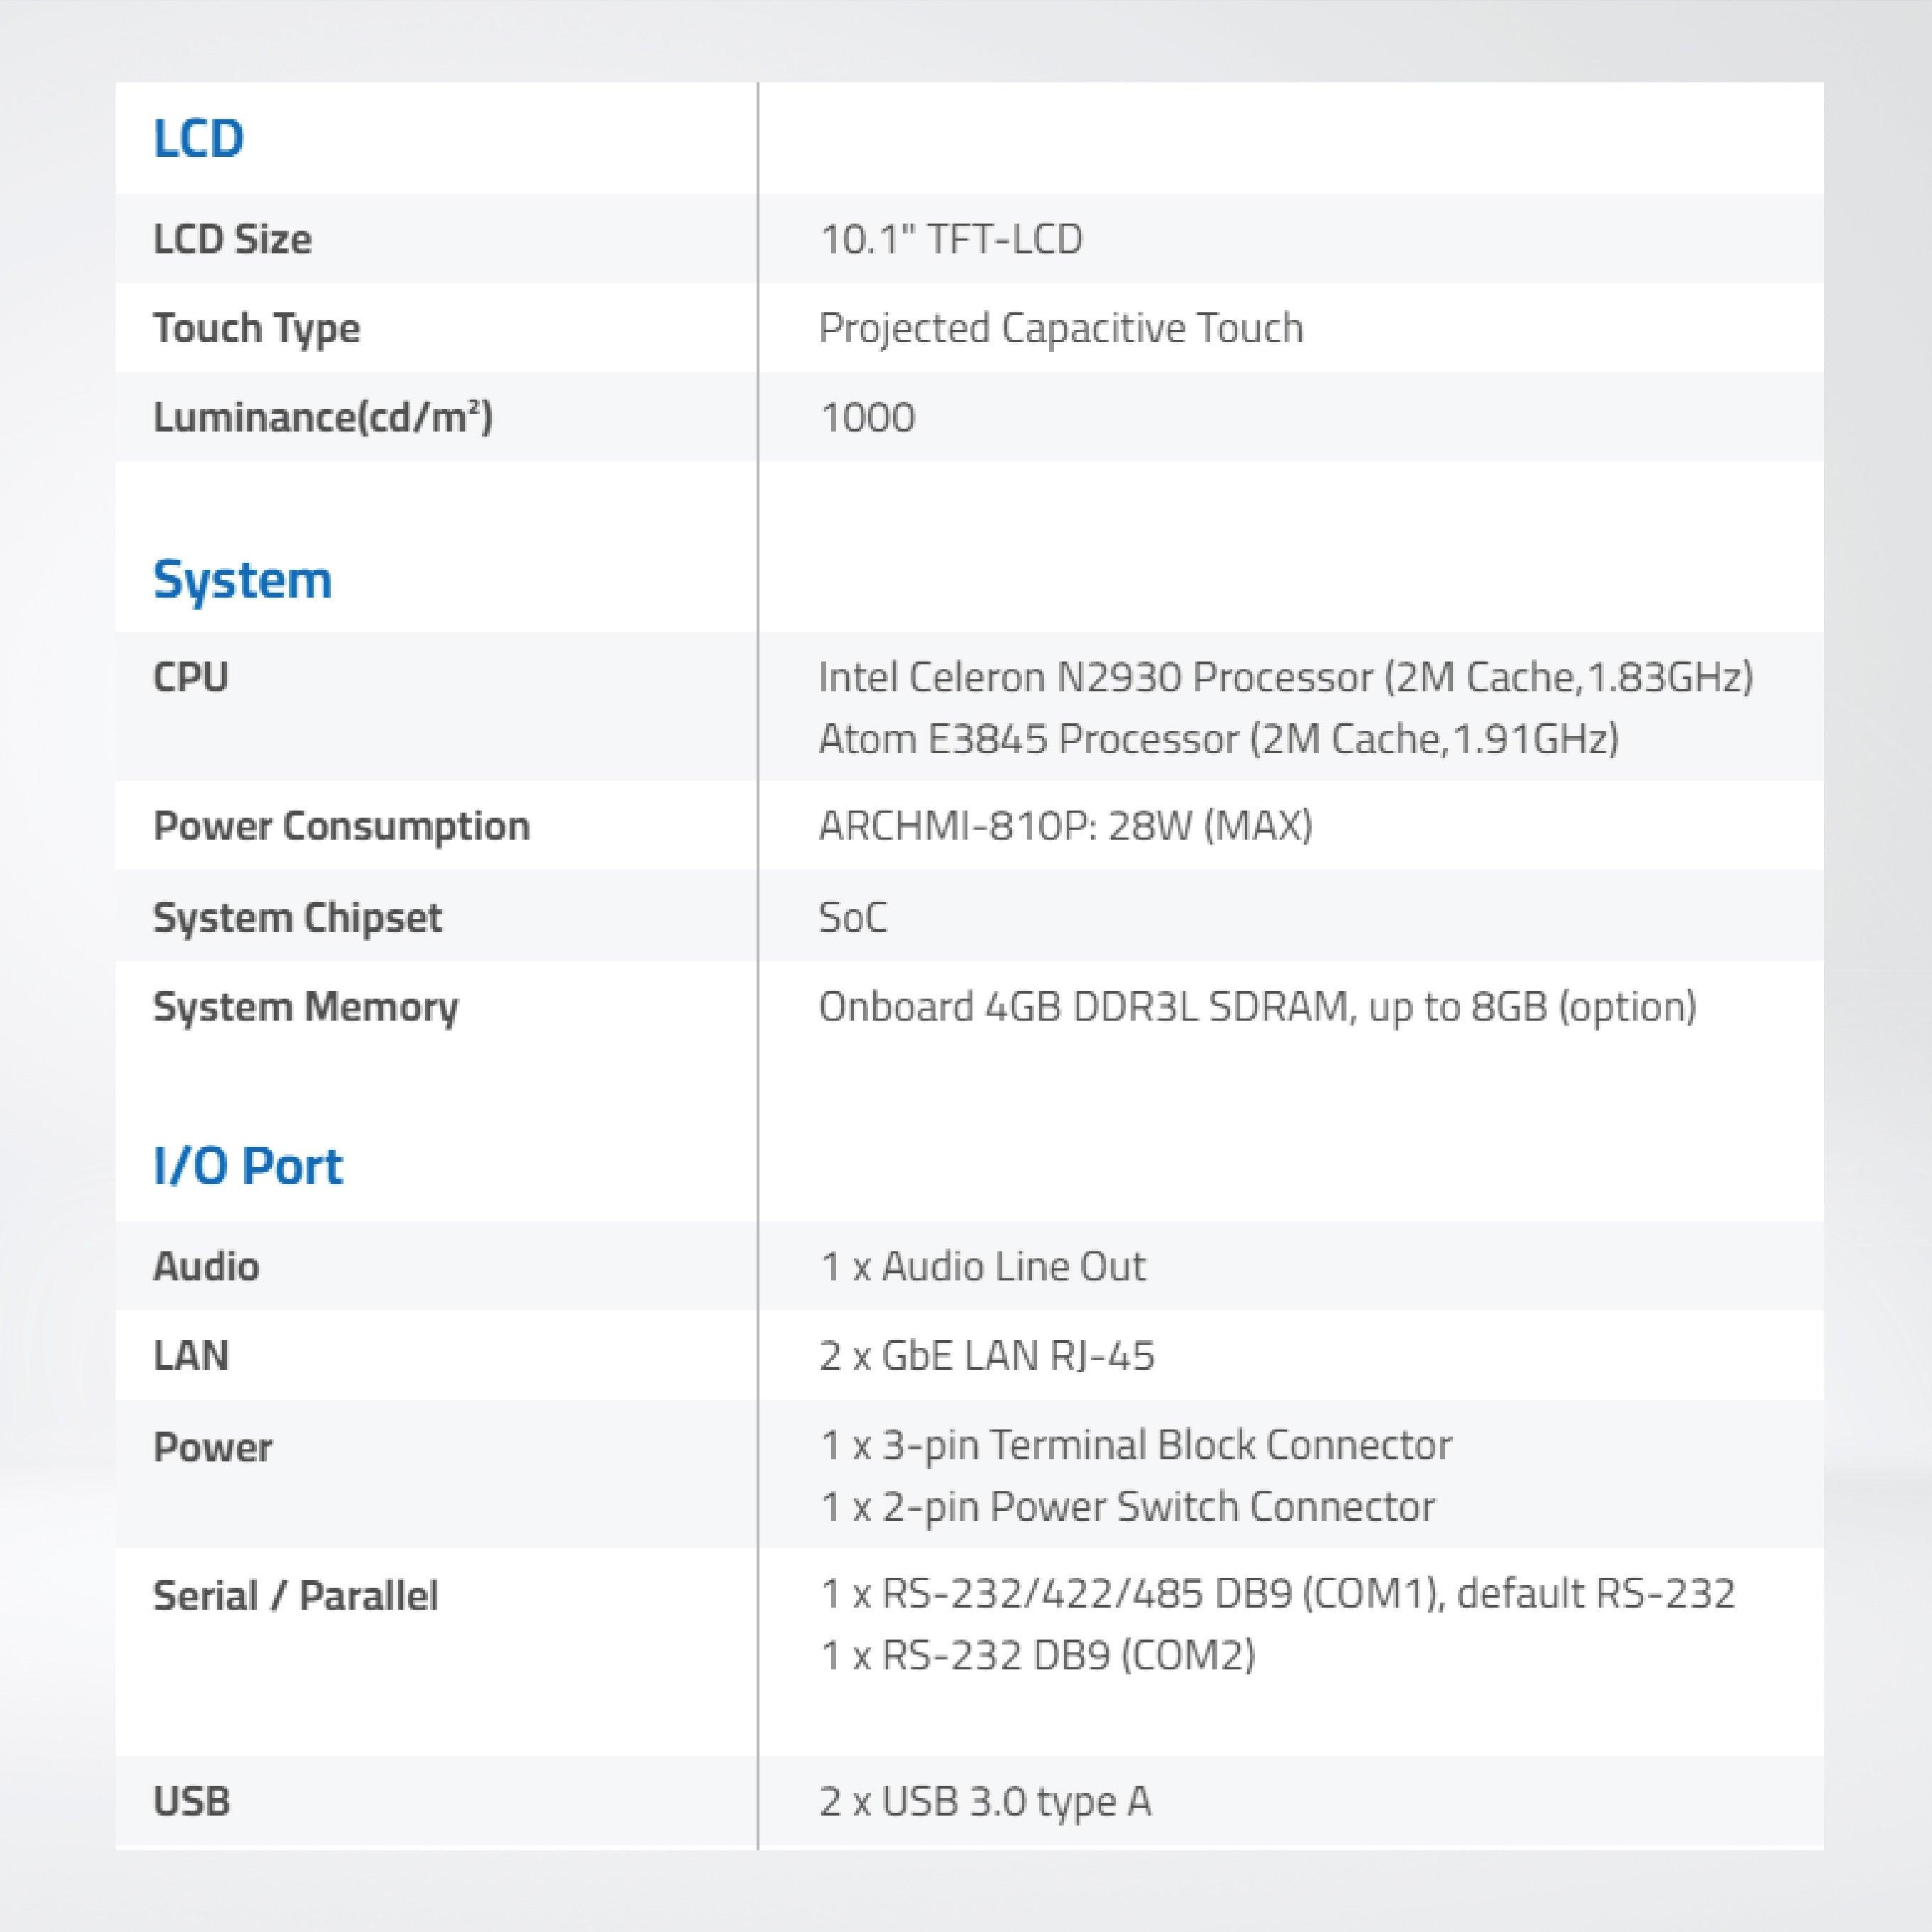 ARCHMI-810PH 10.1" Intel Celeron N2930/ Atom E3845, Fanless Industrial Compact Size Panel PC - Riverplus